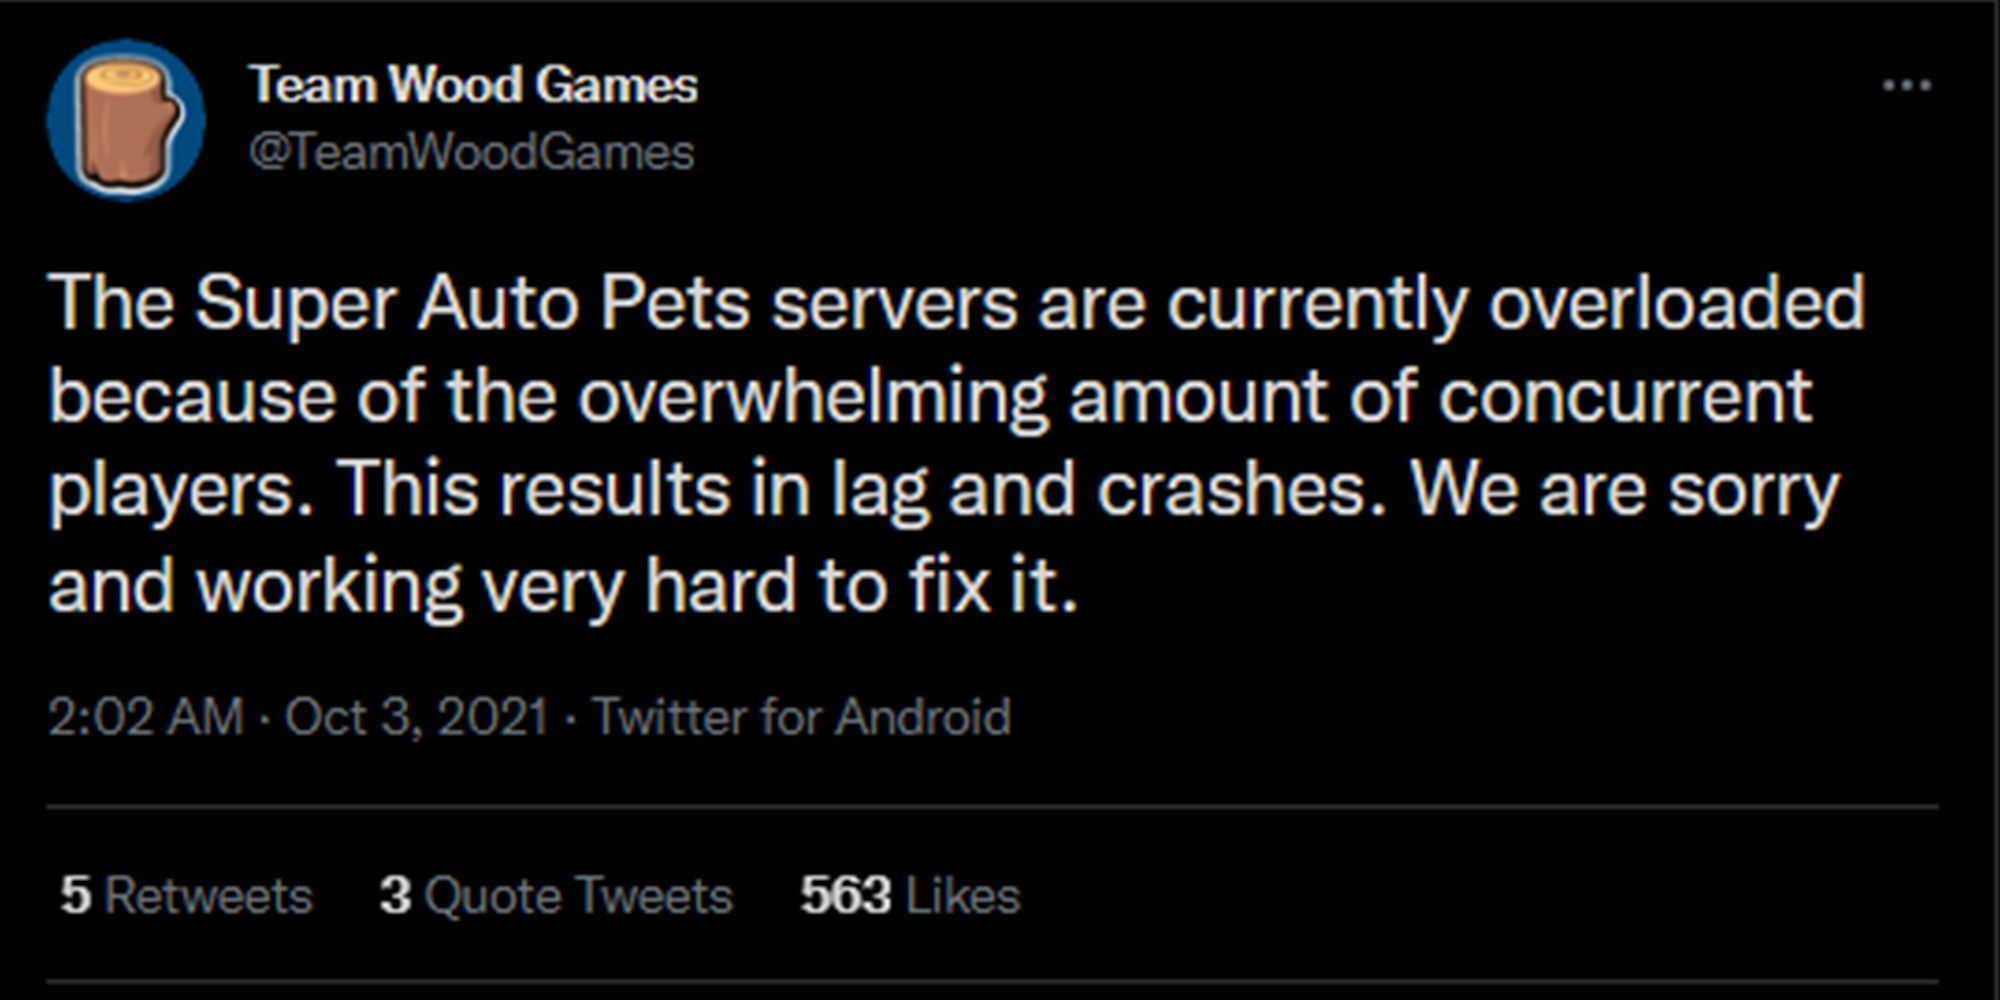 Super Auto Pets - Team Wood Games Tweet On Server Instability